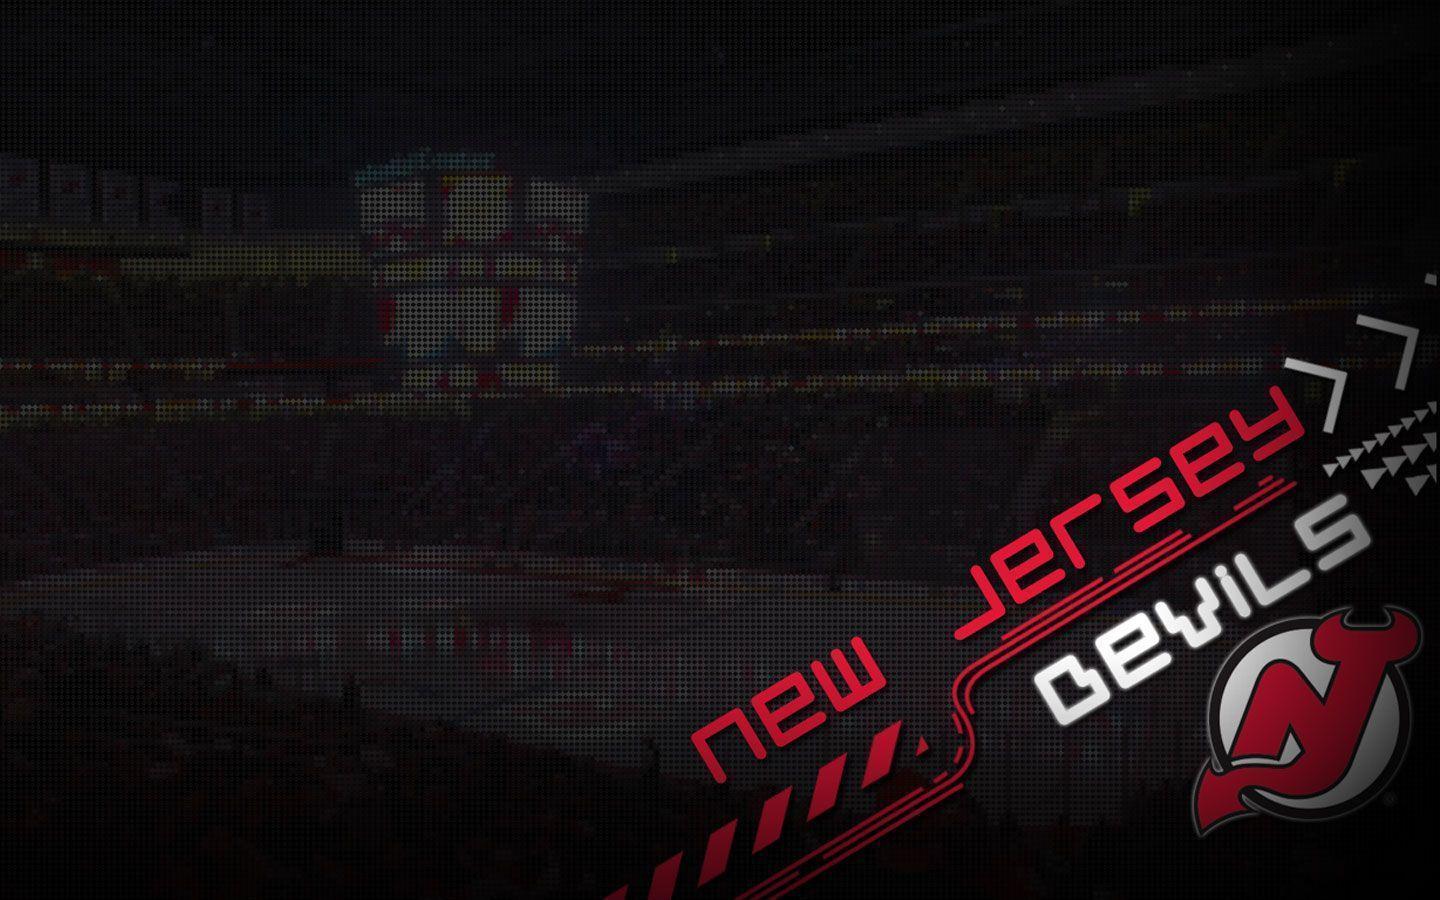 New Jersey Devils wallpaper. New Jersey Devils background